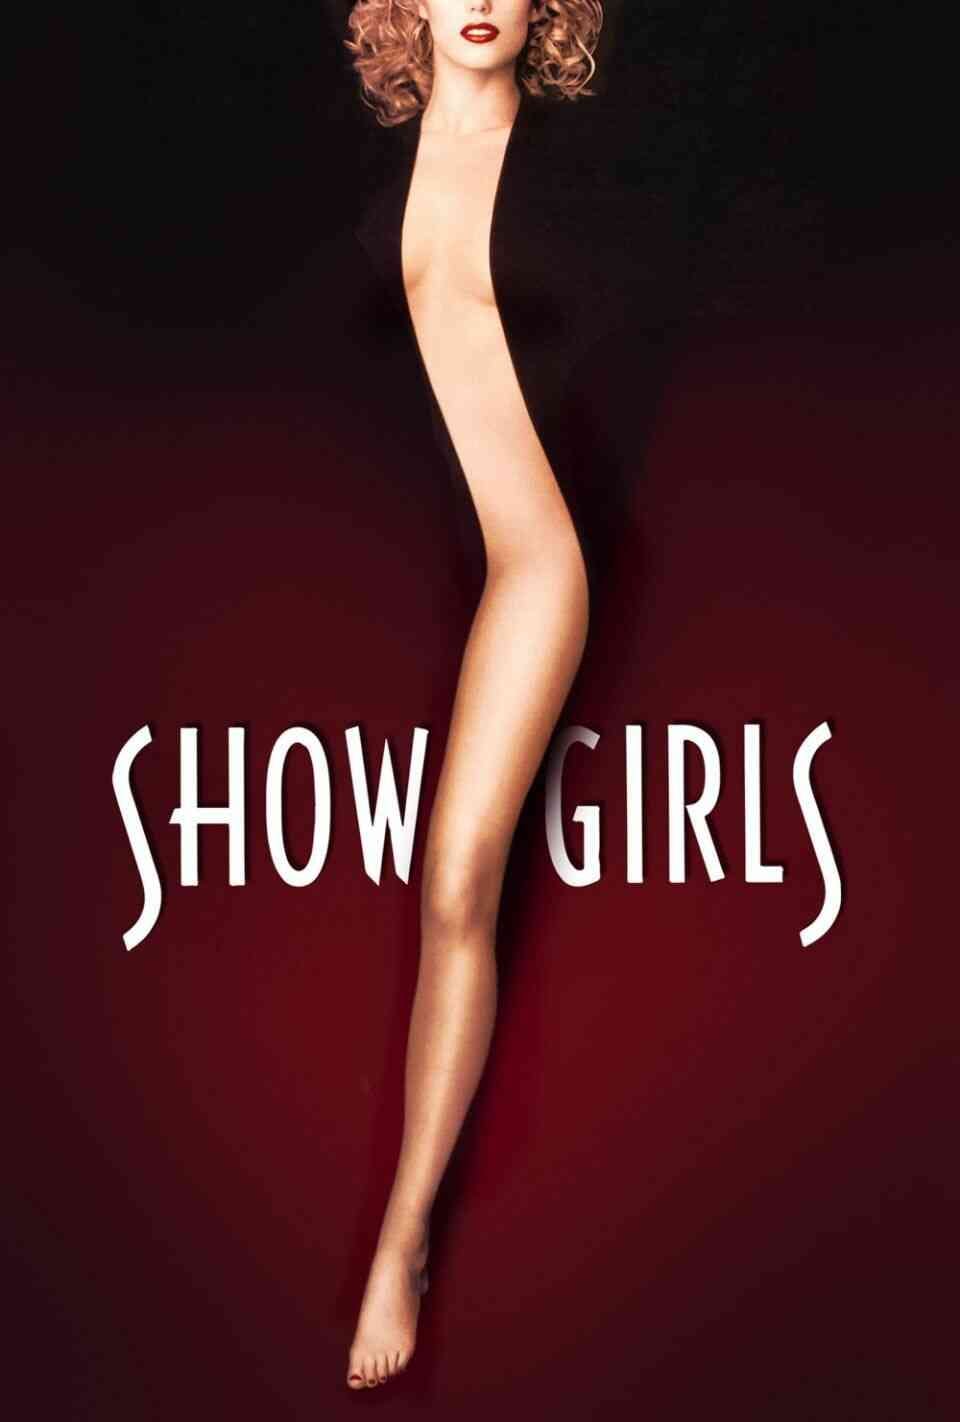 Read Showgirls screenplay (poster)